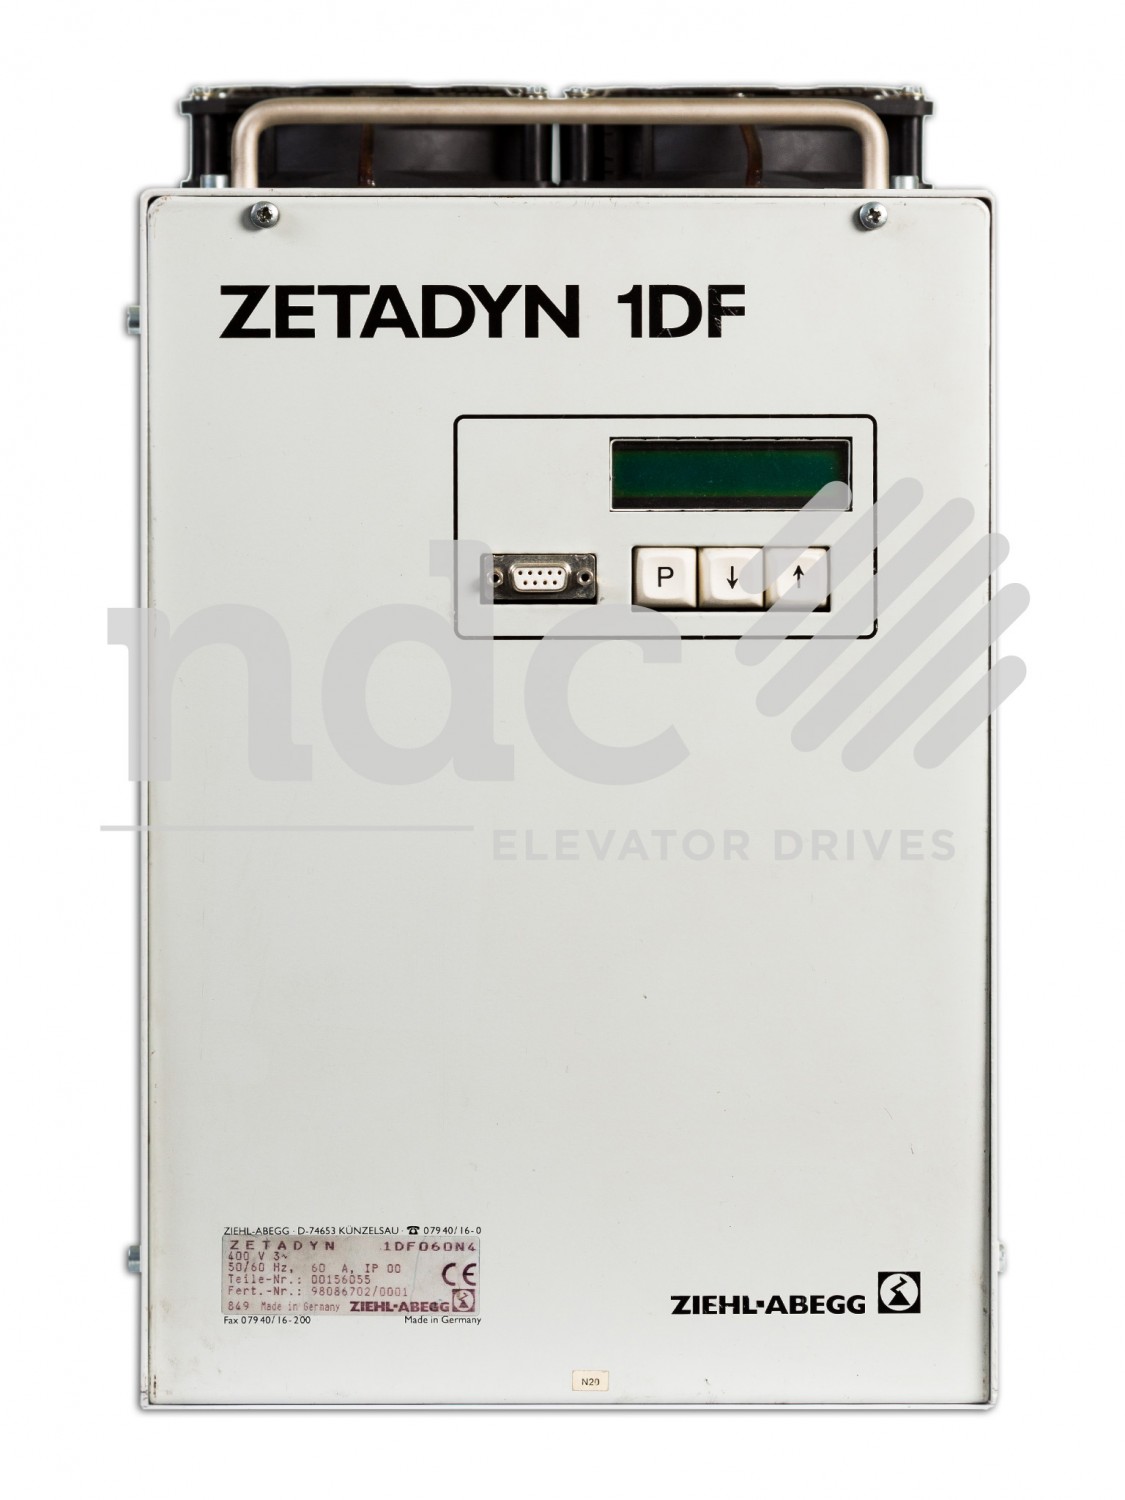 Ziehl-Abegg Zetadyn 1DF | NDC Elevator Drives